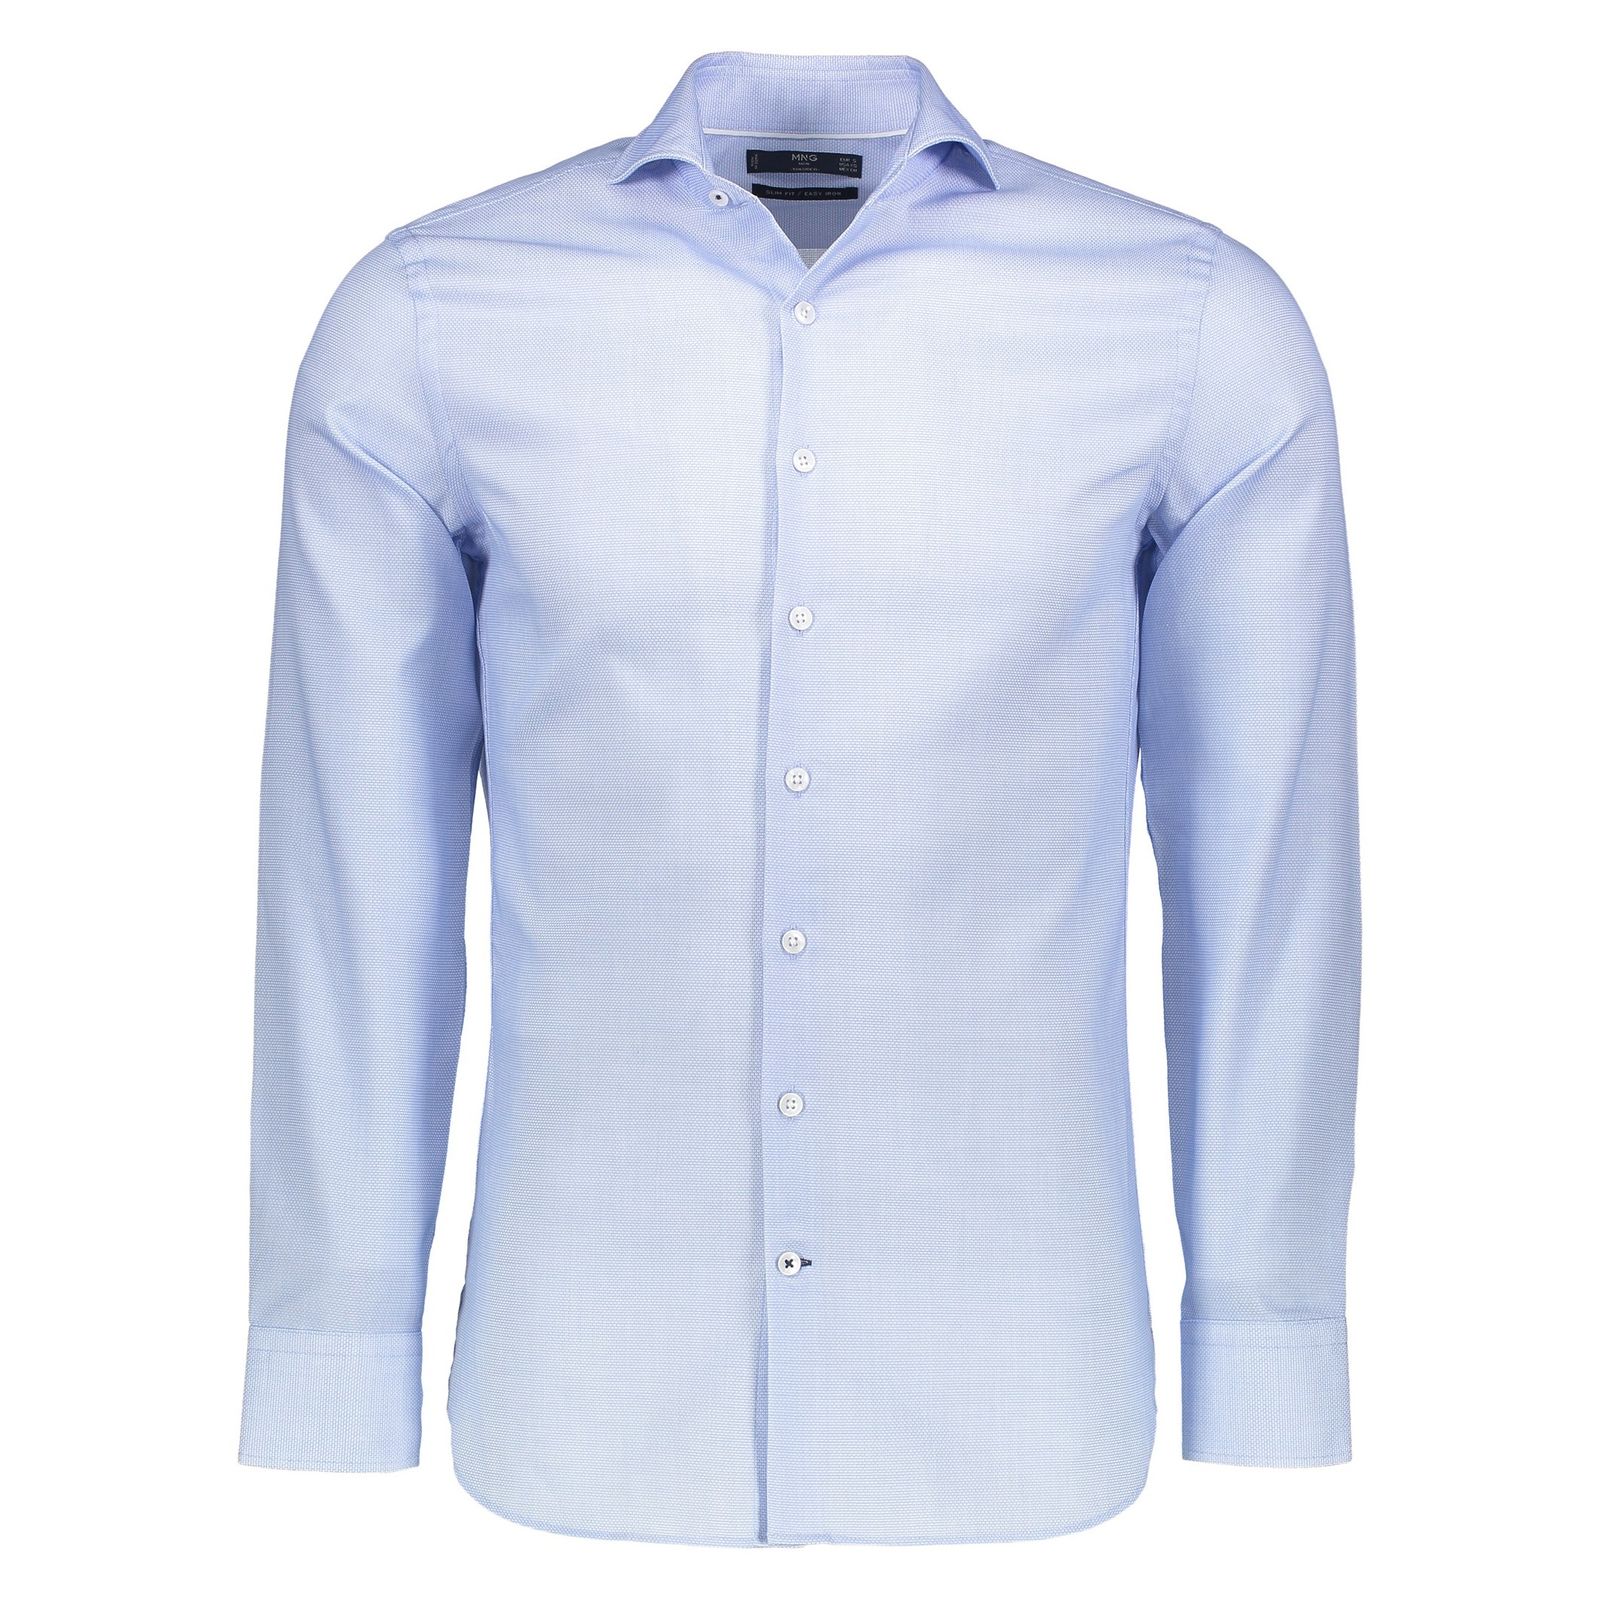 پیراهن رسمی مردانه - مانگو - آبي روشن - 5